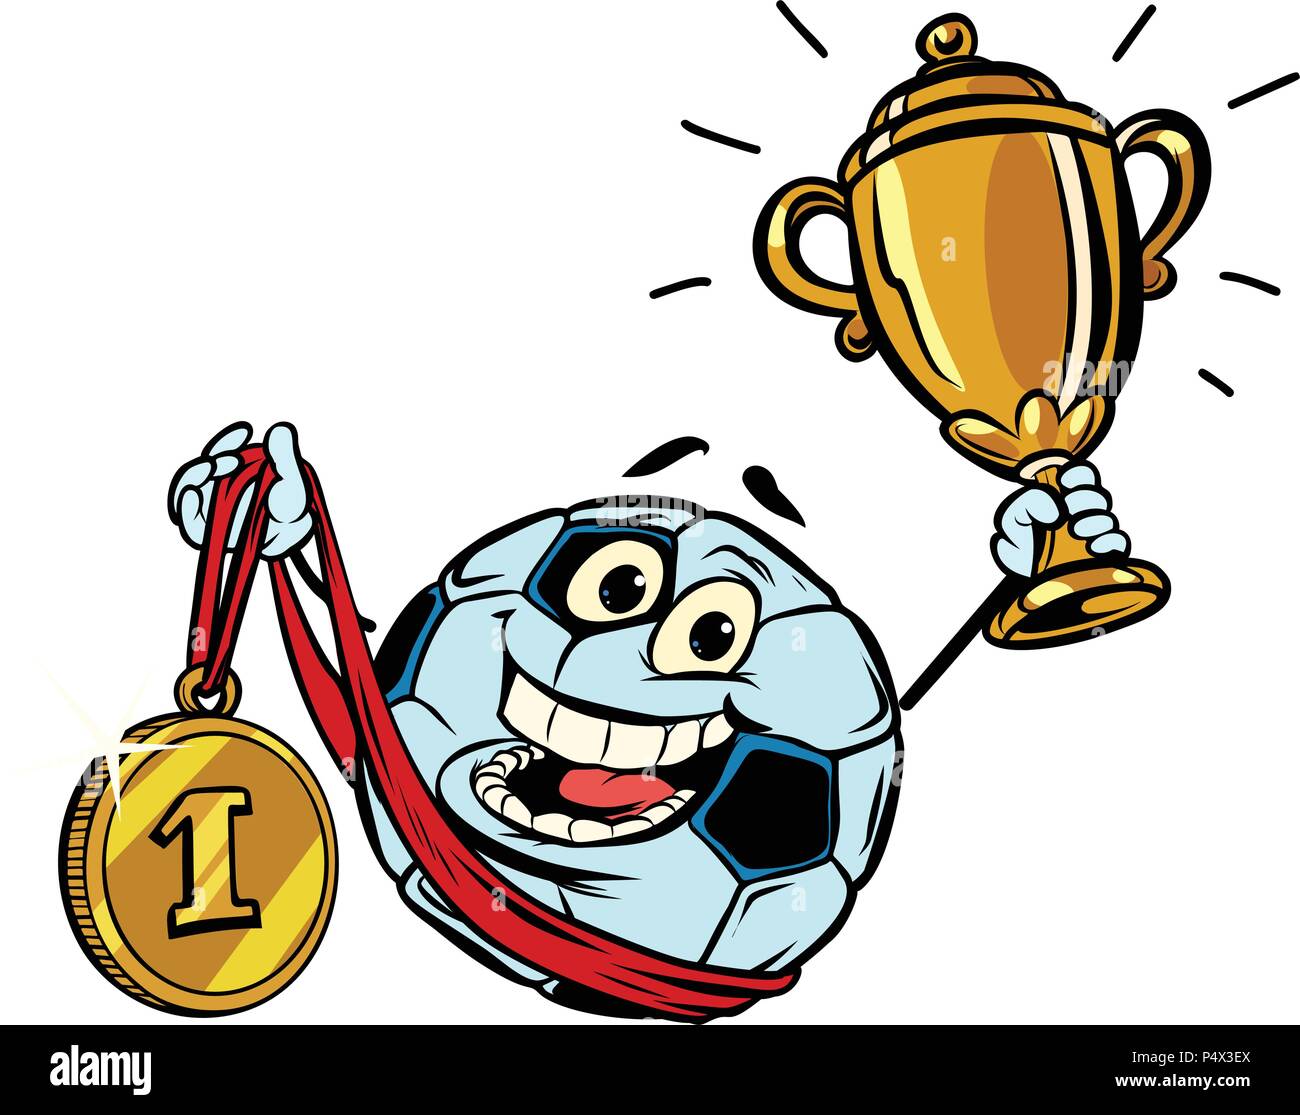 Primer lugar medalla de oro. Balón de fútbol soccer de carácter aislado. Ilustración del Vector